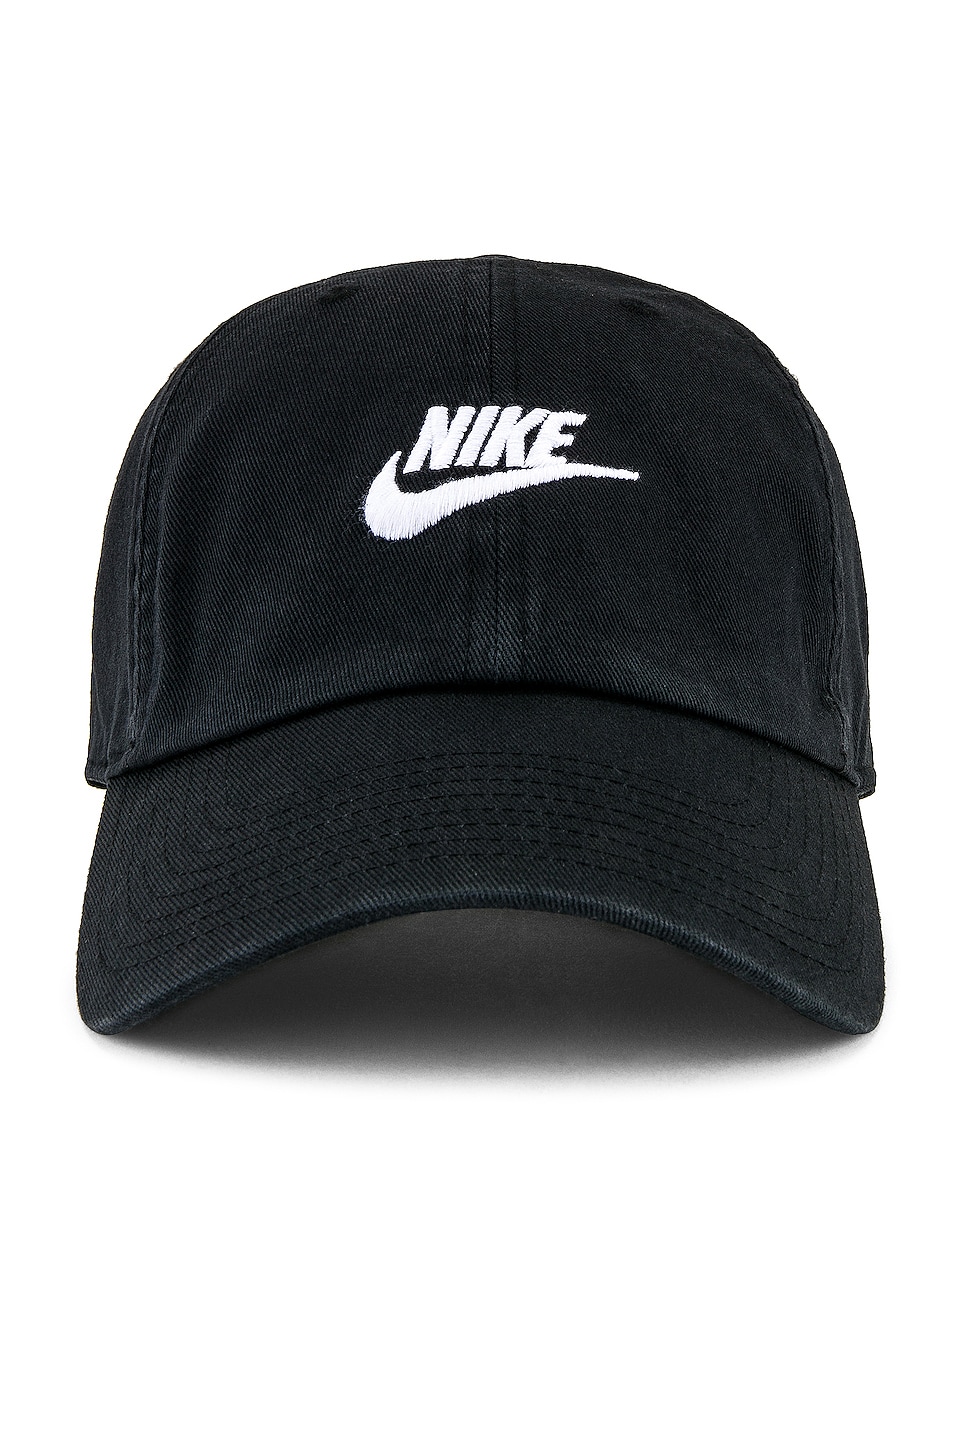 Nike Sportswear Heritage86 Futura Washed Cap in Black & White | REVOLVE